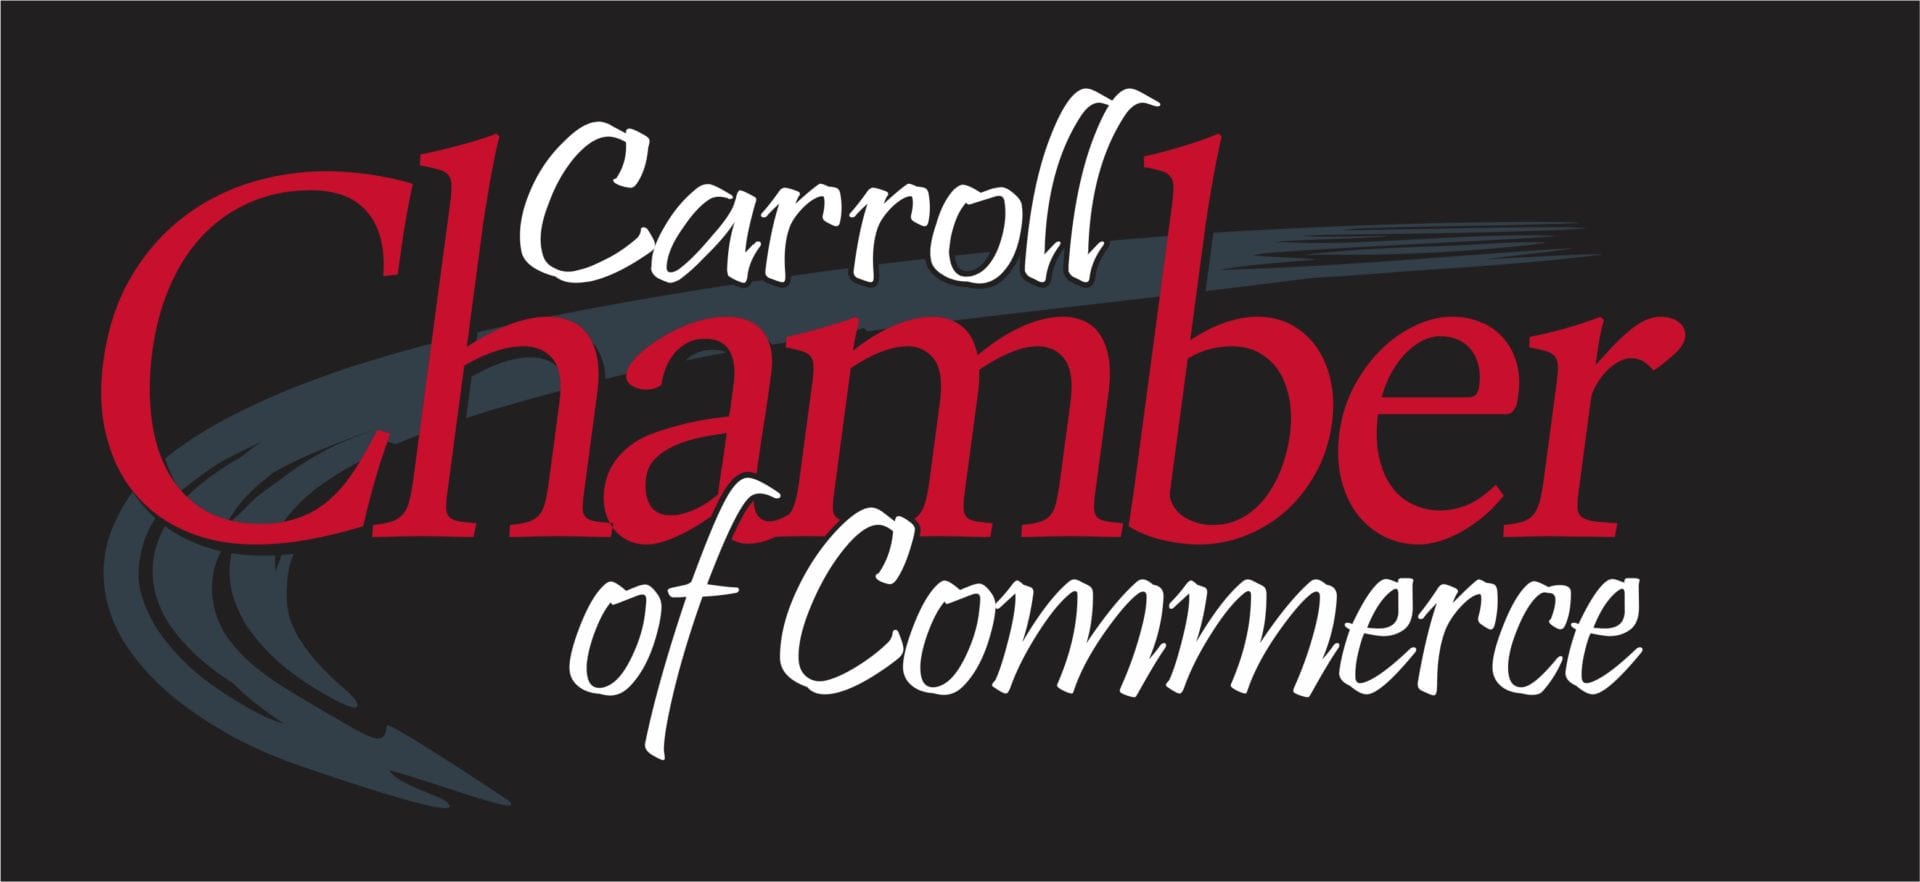 Carroll, IA Chamber of Commerce